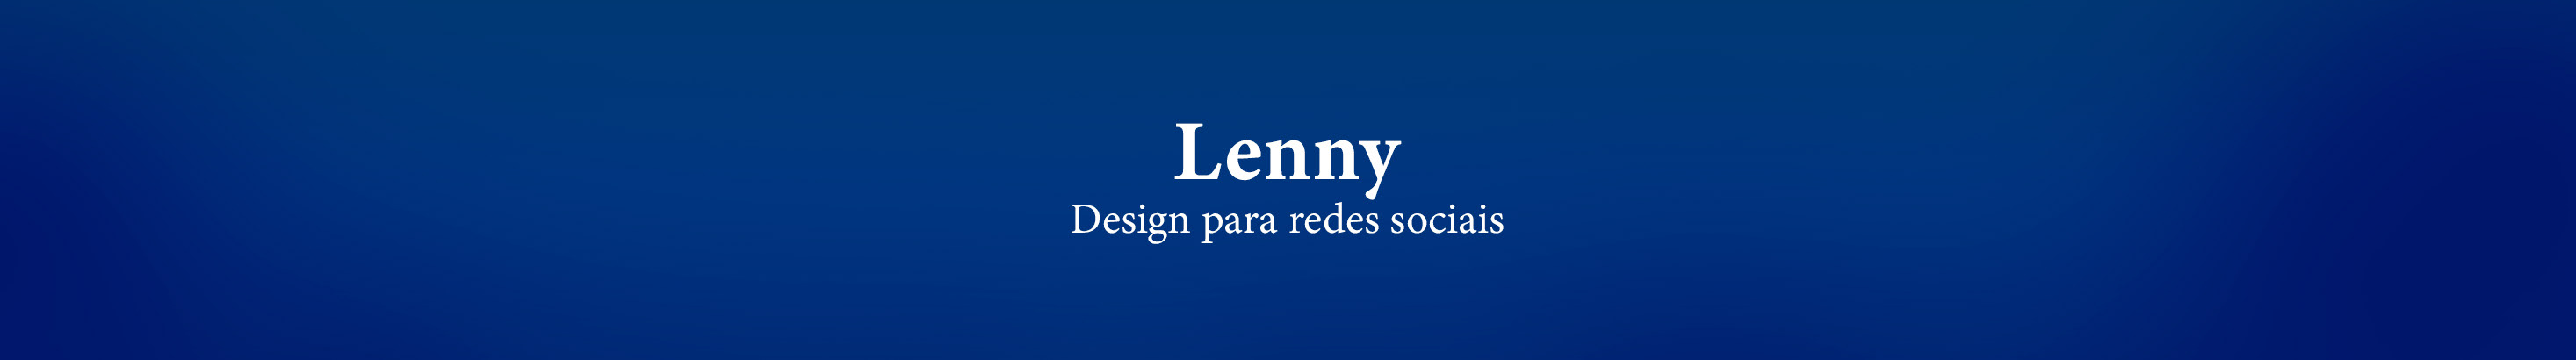 Lenny Designer's profile banner